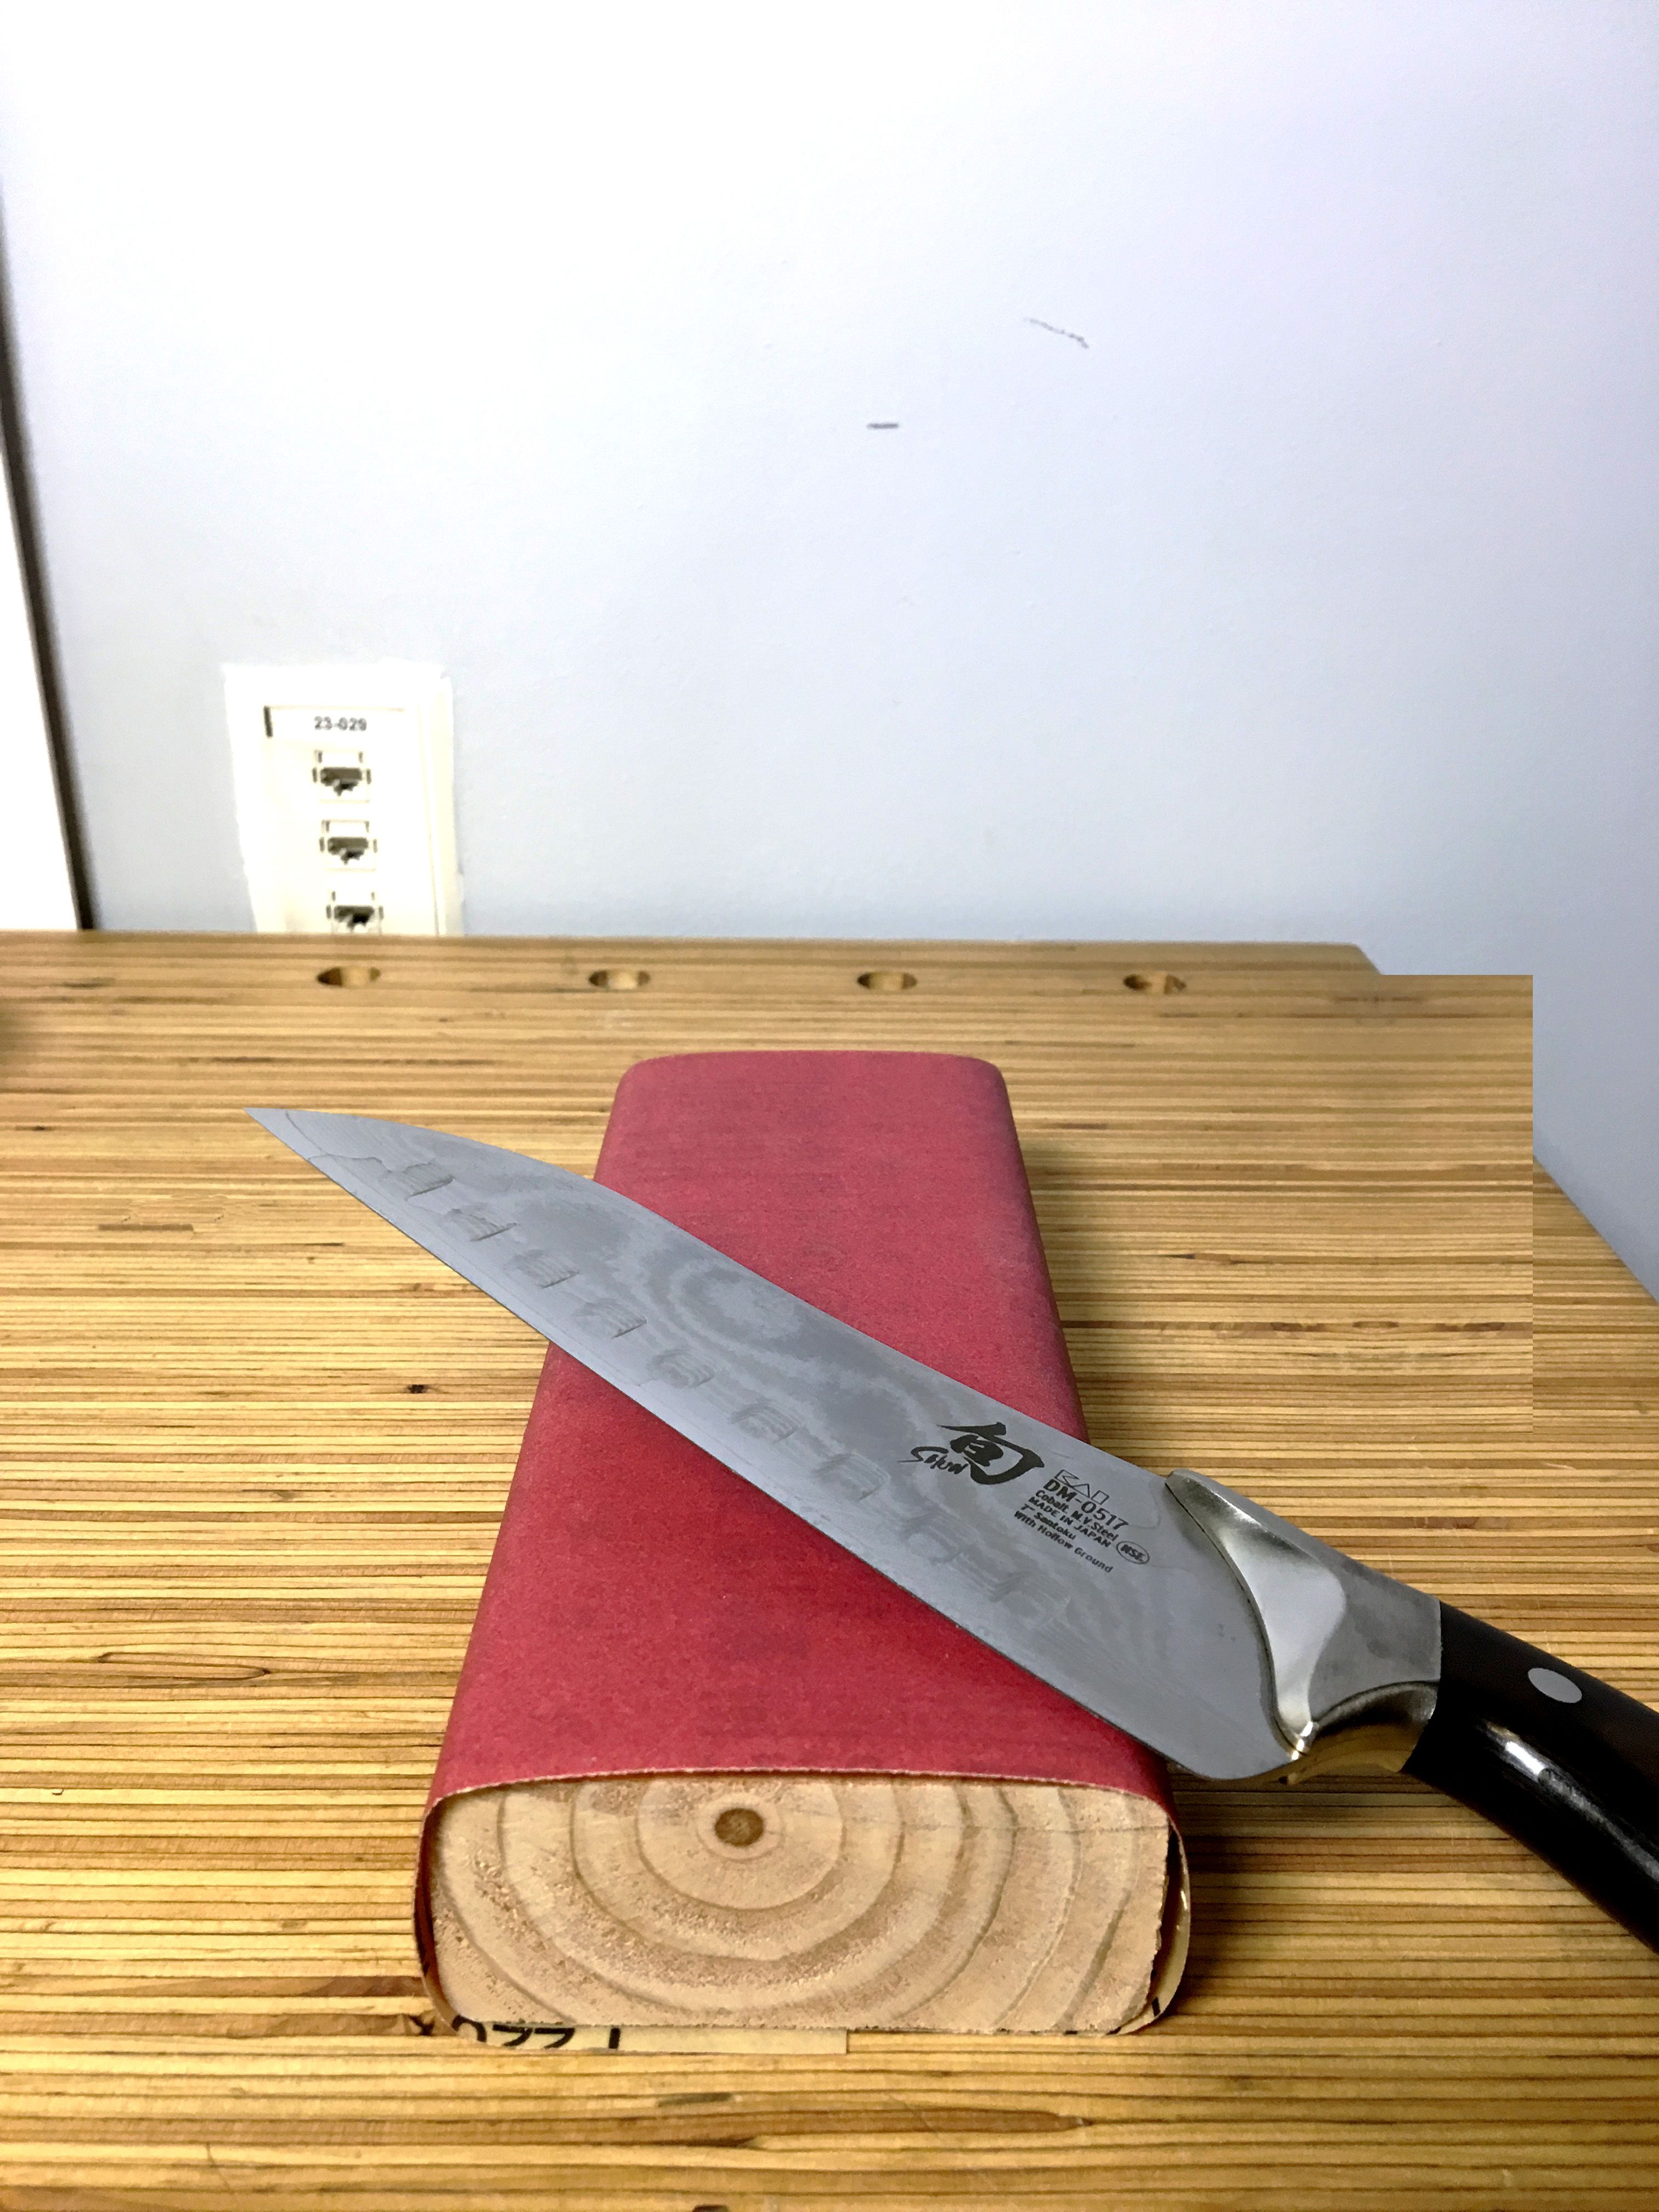 What Grit Sandpaper to Sharpen Knives 